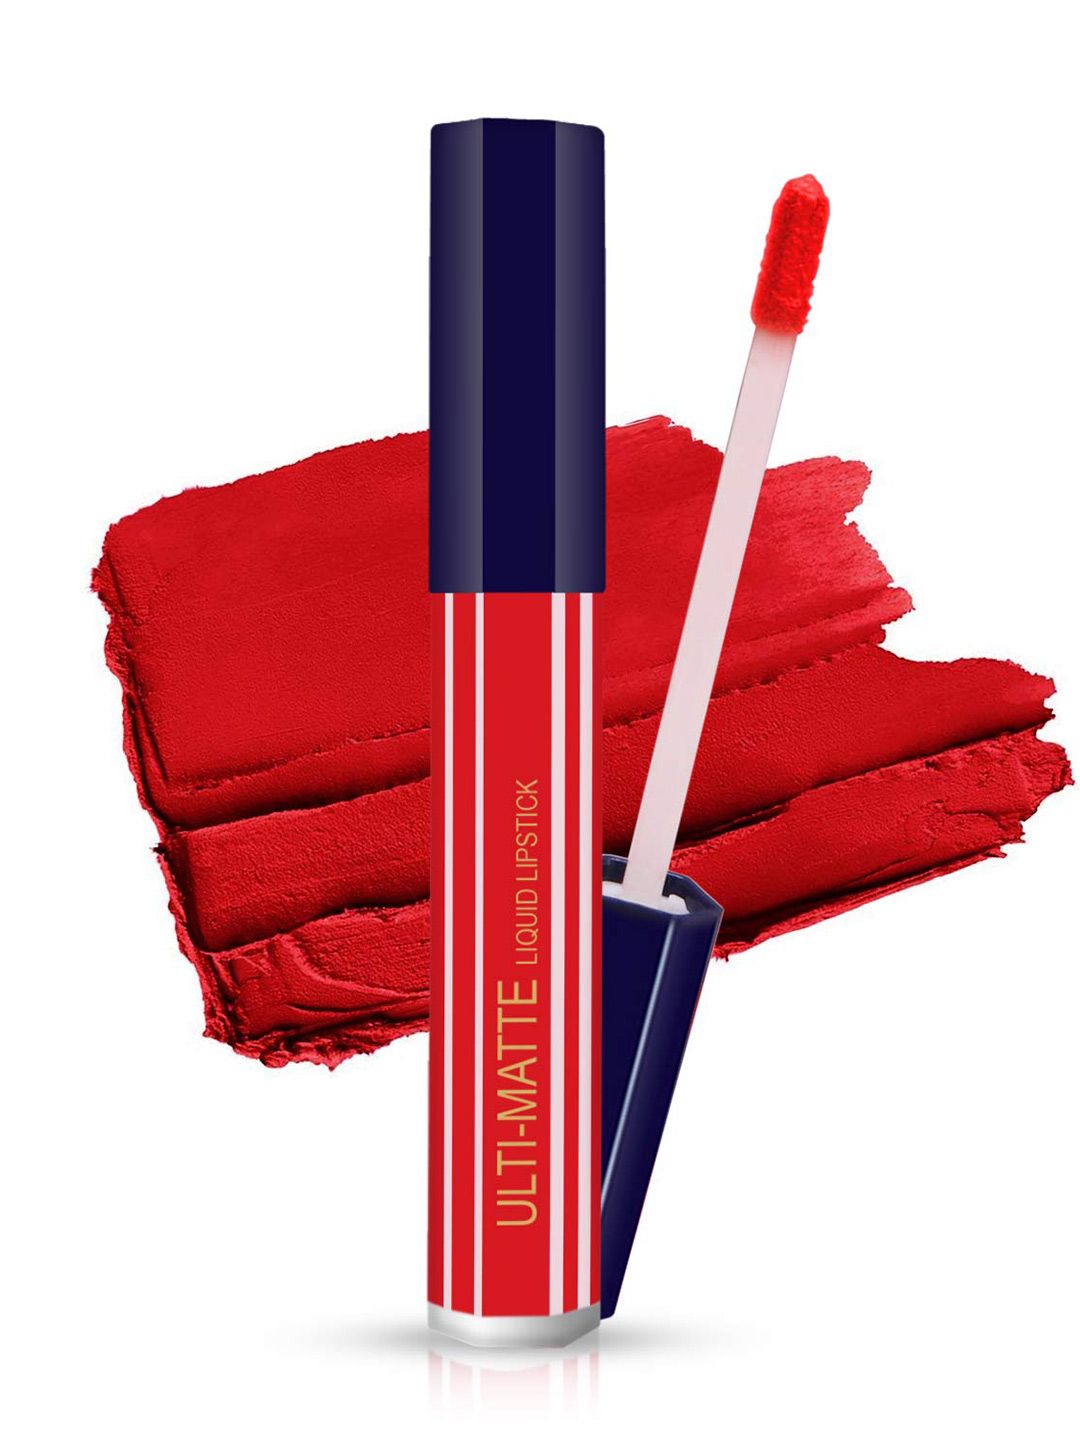 CVB Ulti-Matte Liquid Lipstick 8 ml - Persian Red 09 Price in India